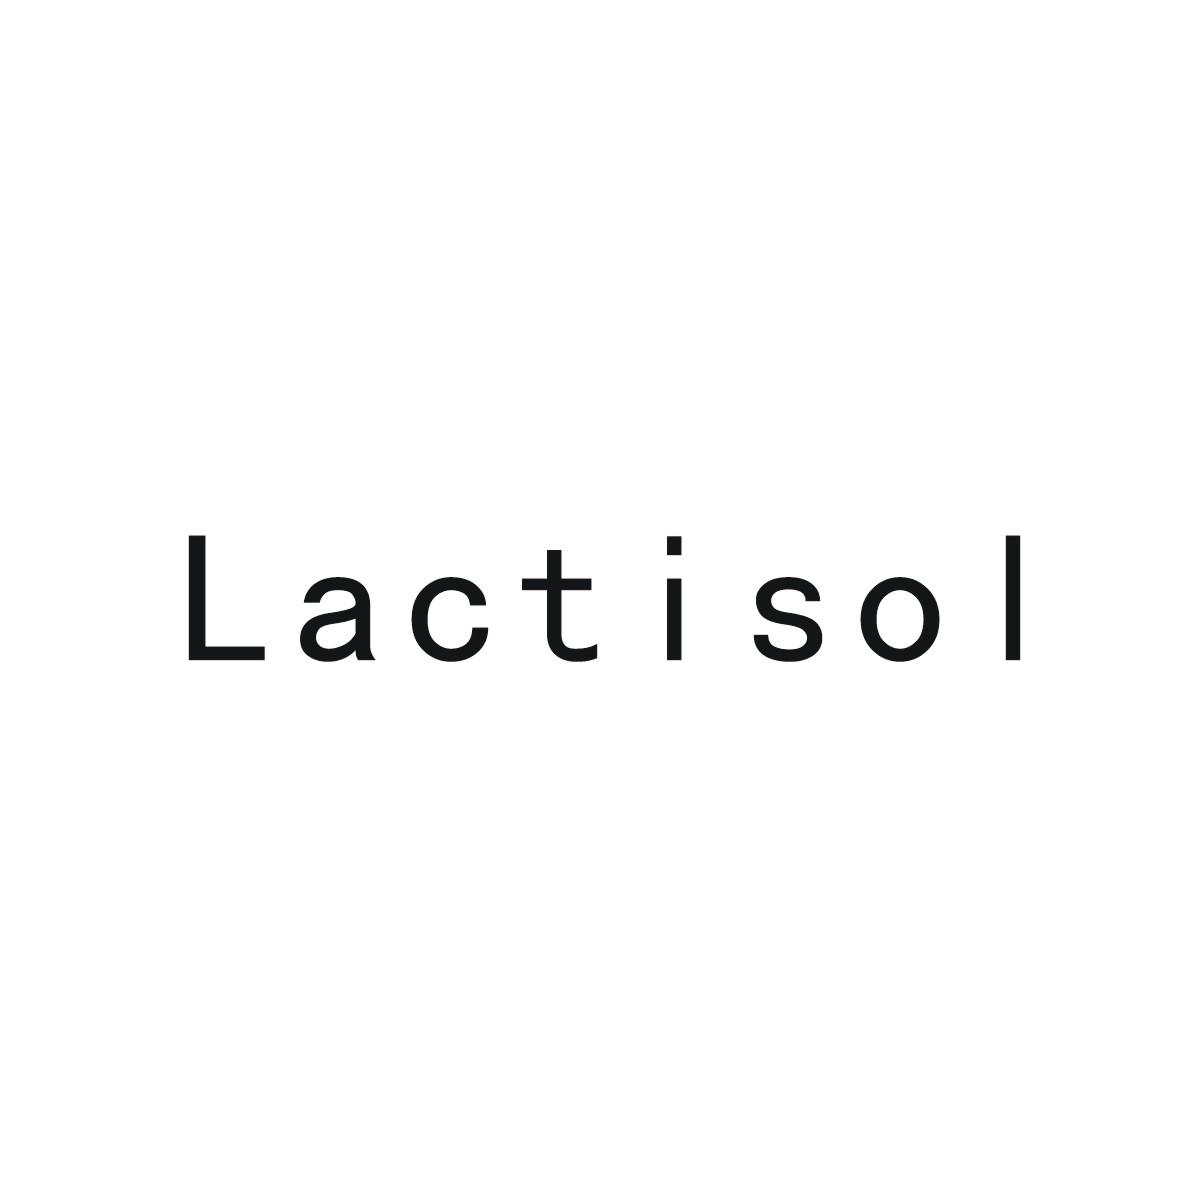 LACTISOL冻伤药膏商标转让费用买卖交易流程